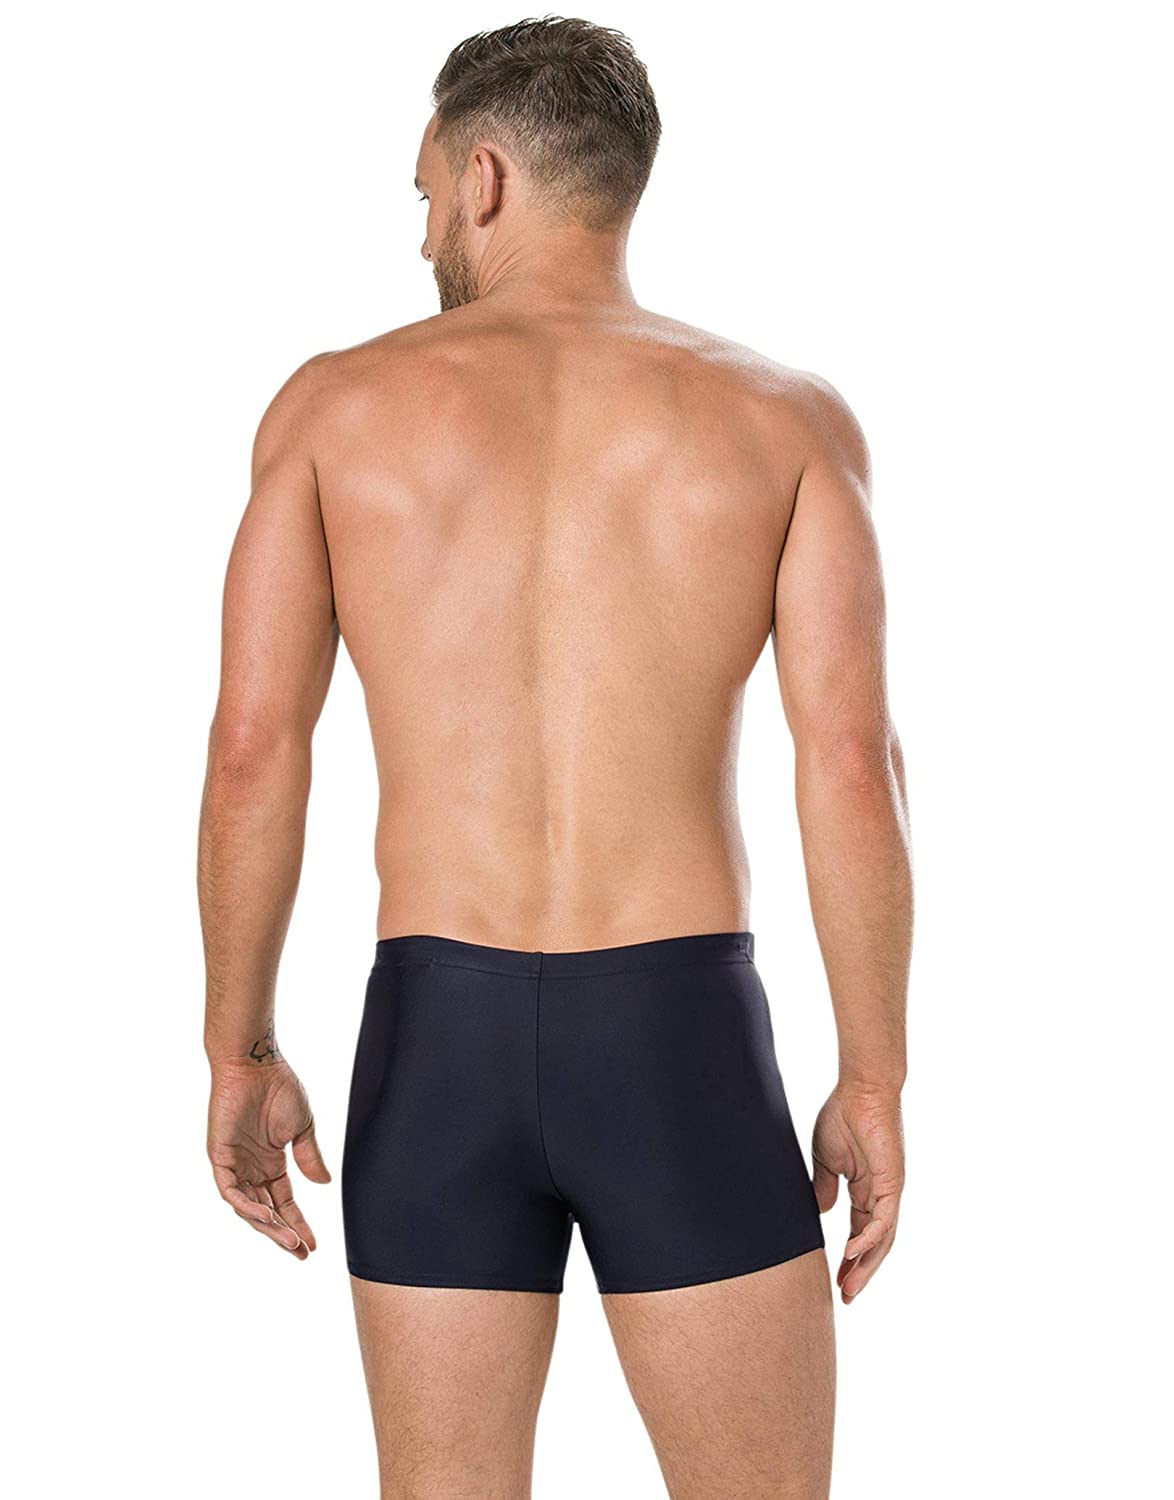 Speedo Gala Logo Swimming Aqua Shorts for Men's, Navy/Bright Zest - Best Price online Prokicksports.com